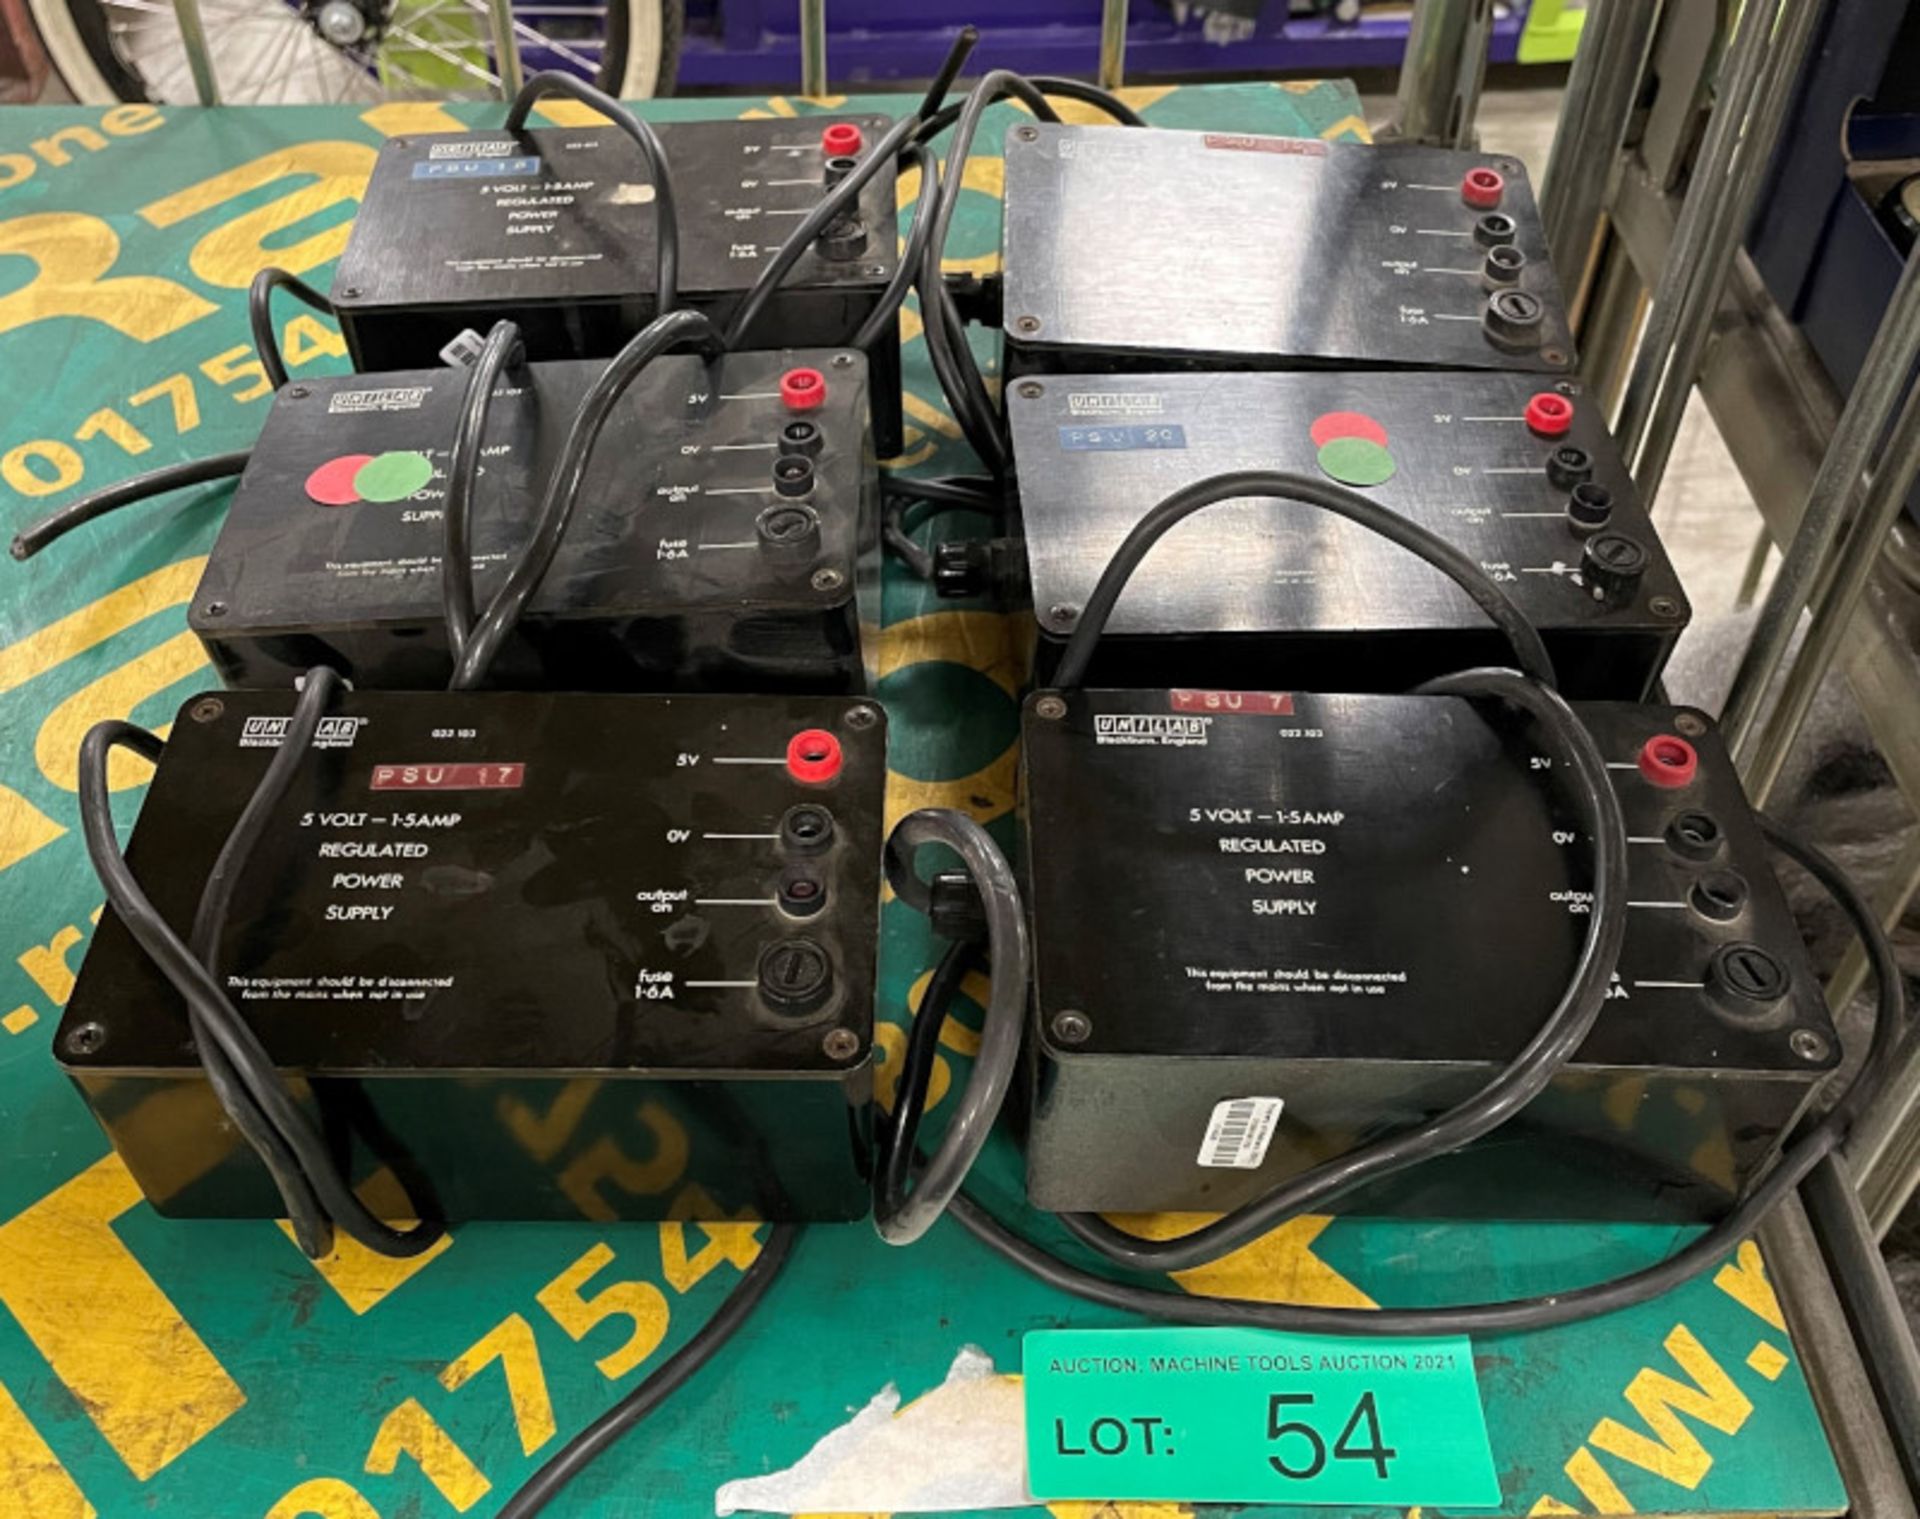 6x Unilab 5V 1.5amp regulated power supplies